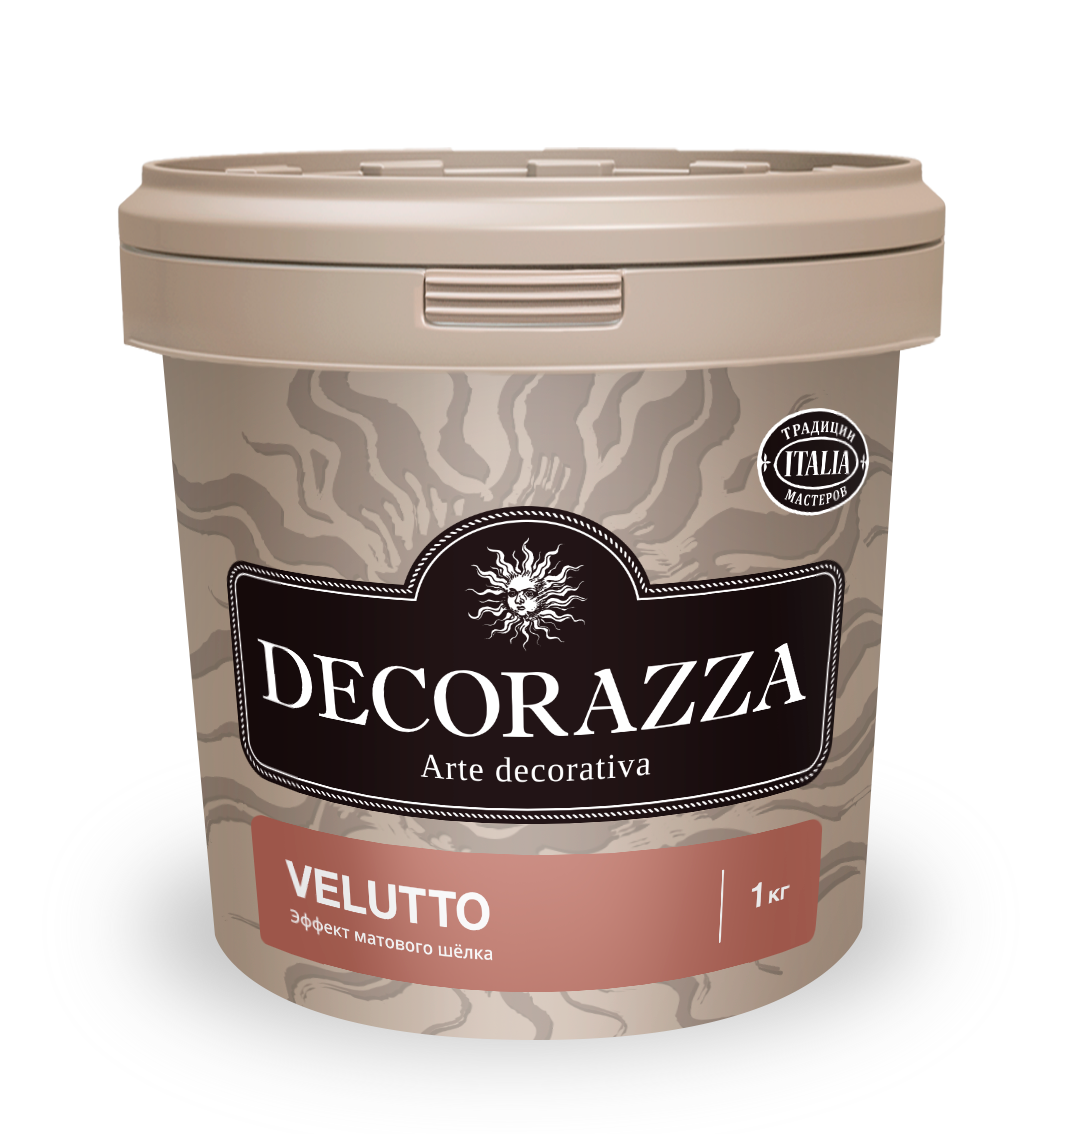 Декоративная штукатурка Decorazza Velluto VT 001, 1 кг декоративная металлизированная краска decorazza